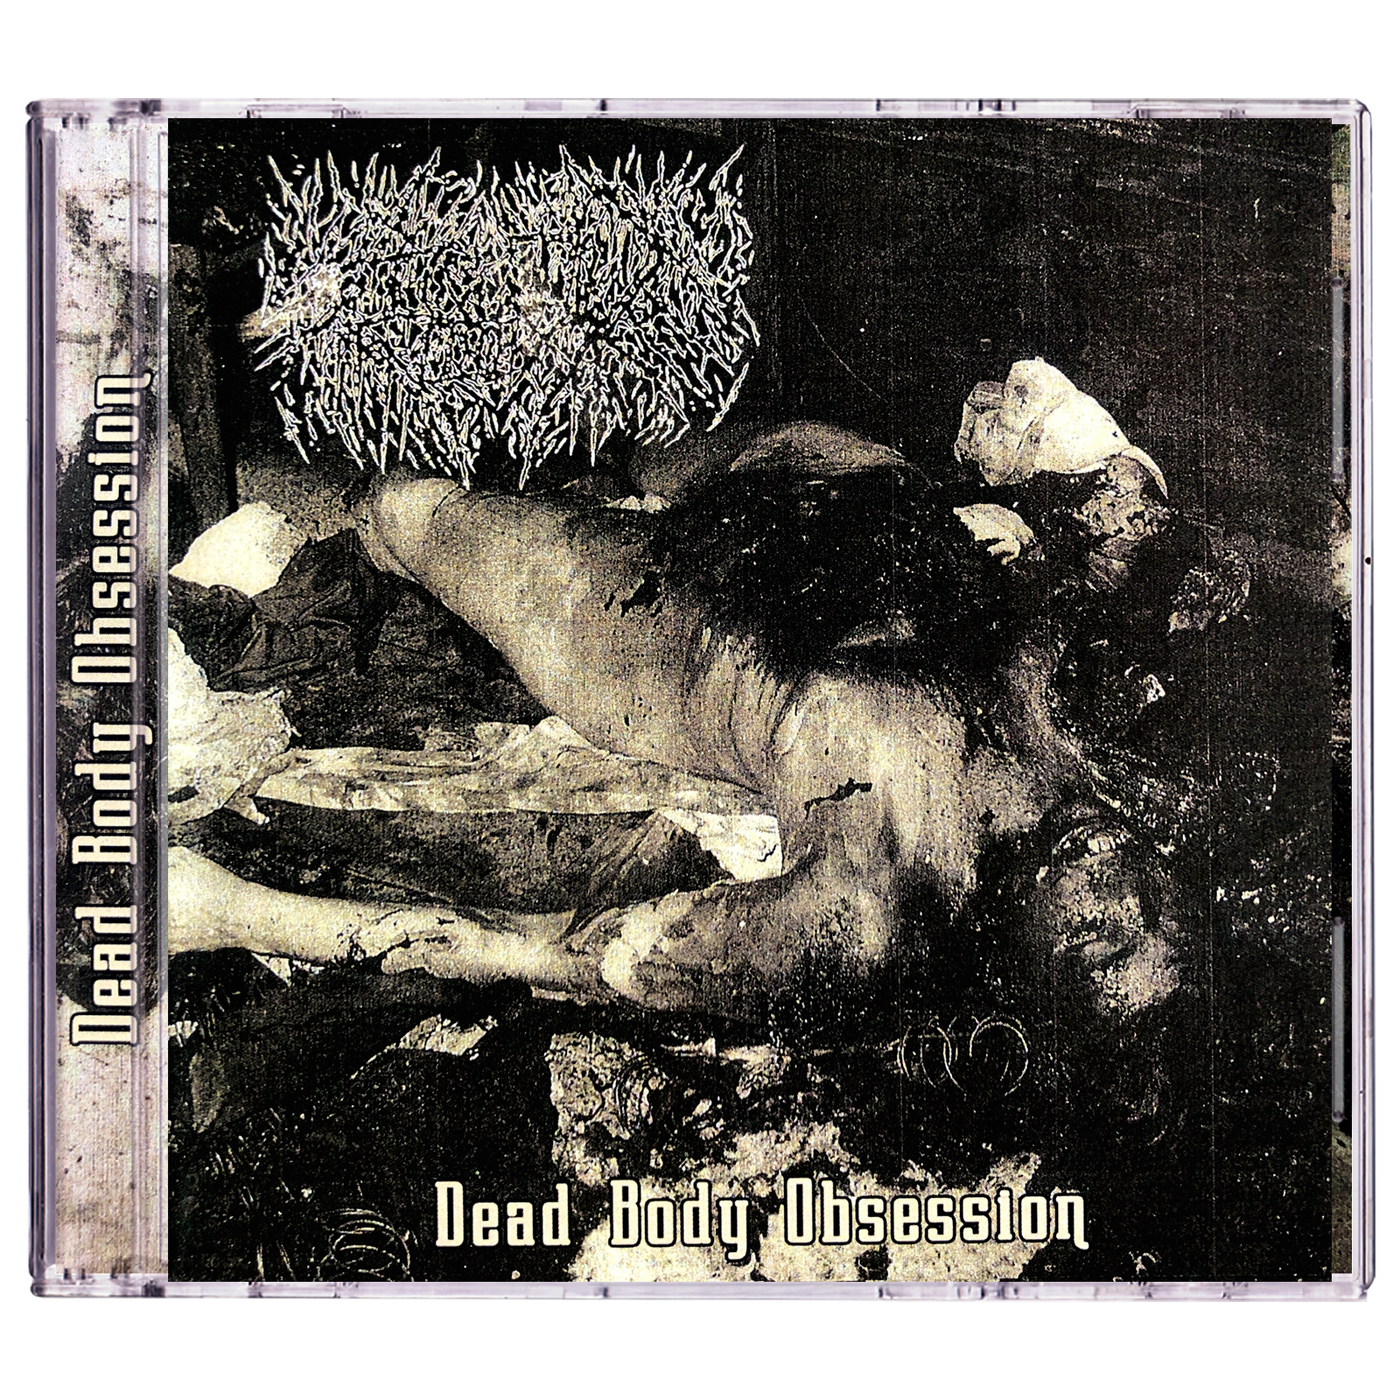 Liquid Viscera 'Dead Body Obsession' CD